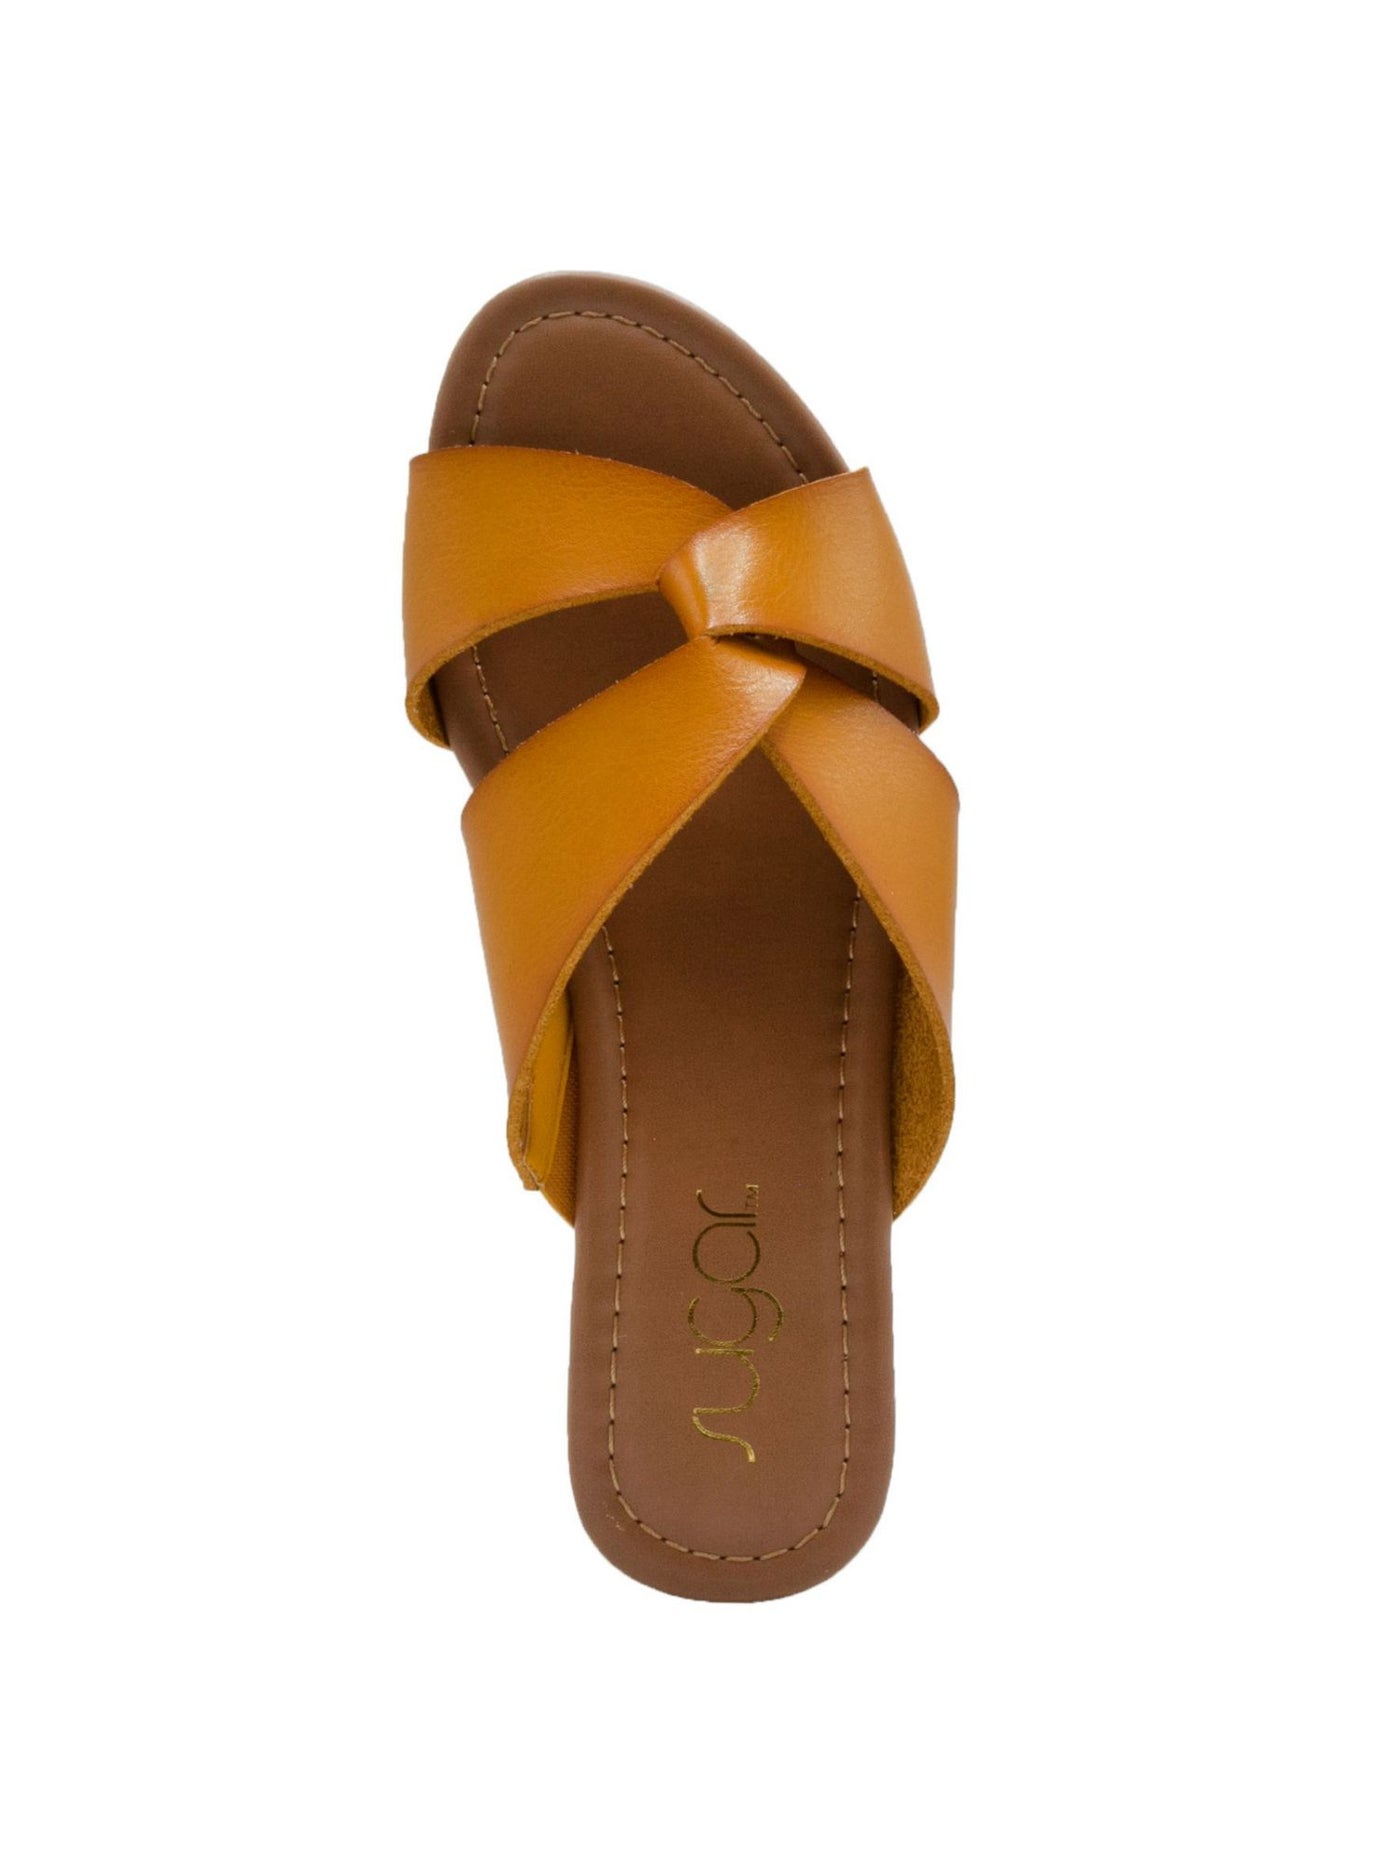 SUGAR Womens Yellow 1/2 Heel Knotted Design Comfort Olena Round Toe Block Heel Slip On Slide Sandals Shoes 9.5 M